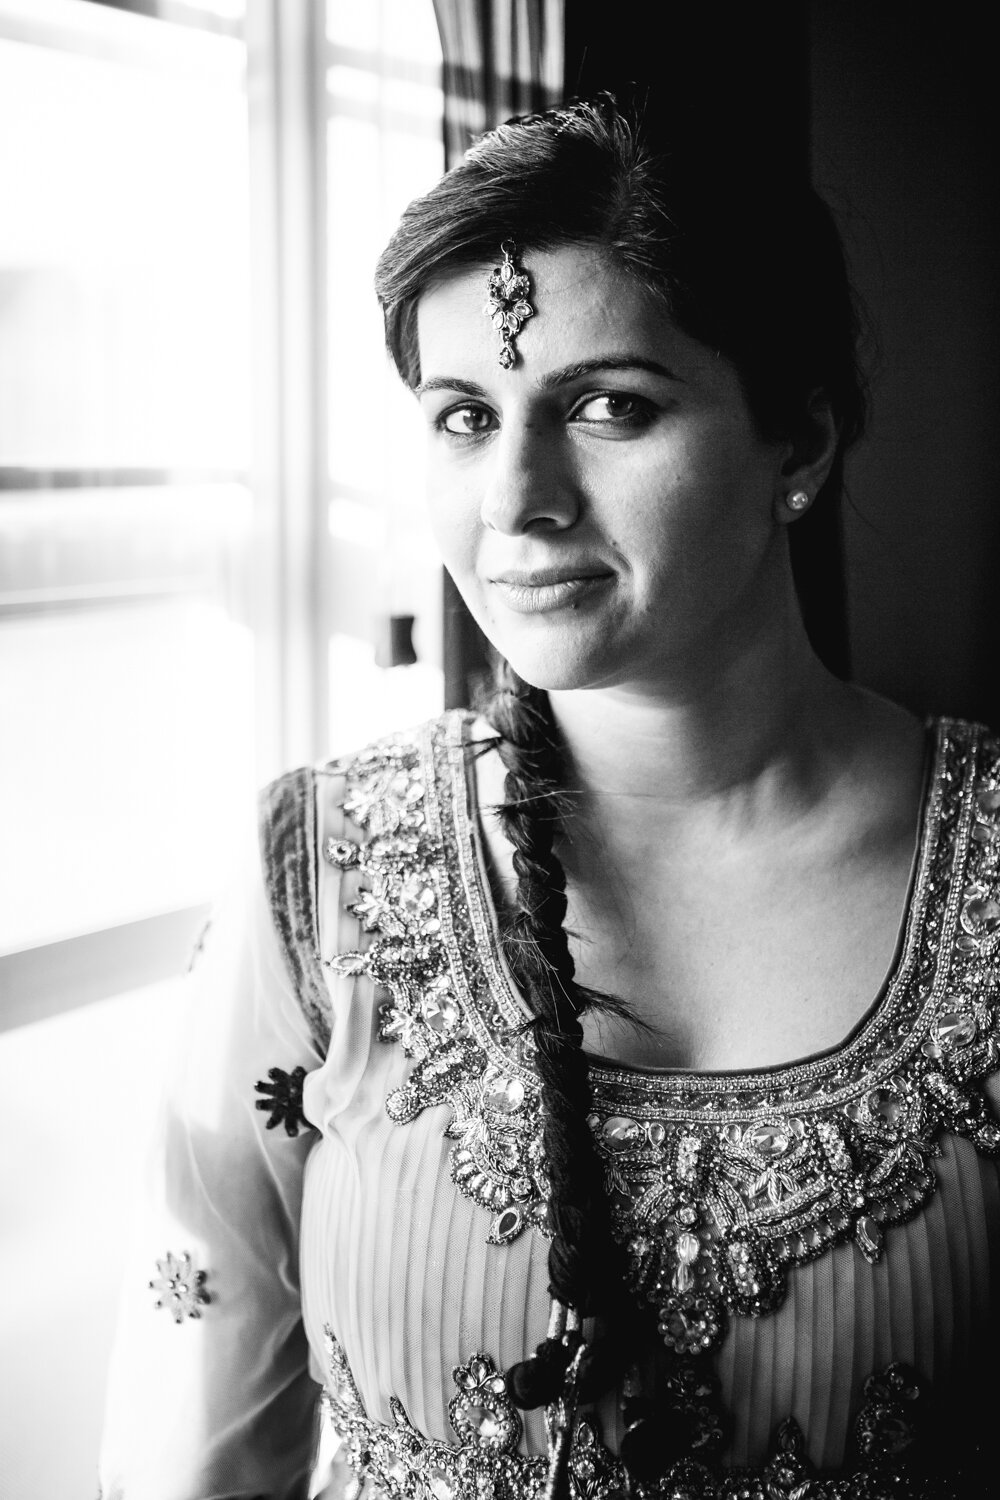   Denver Indian Wedding photographed by JMGant Photography.&nbsp;  